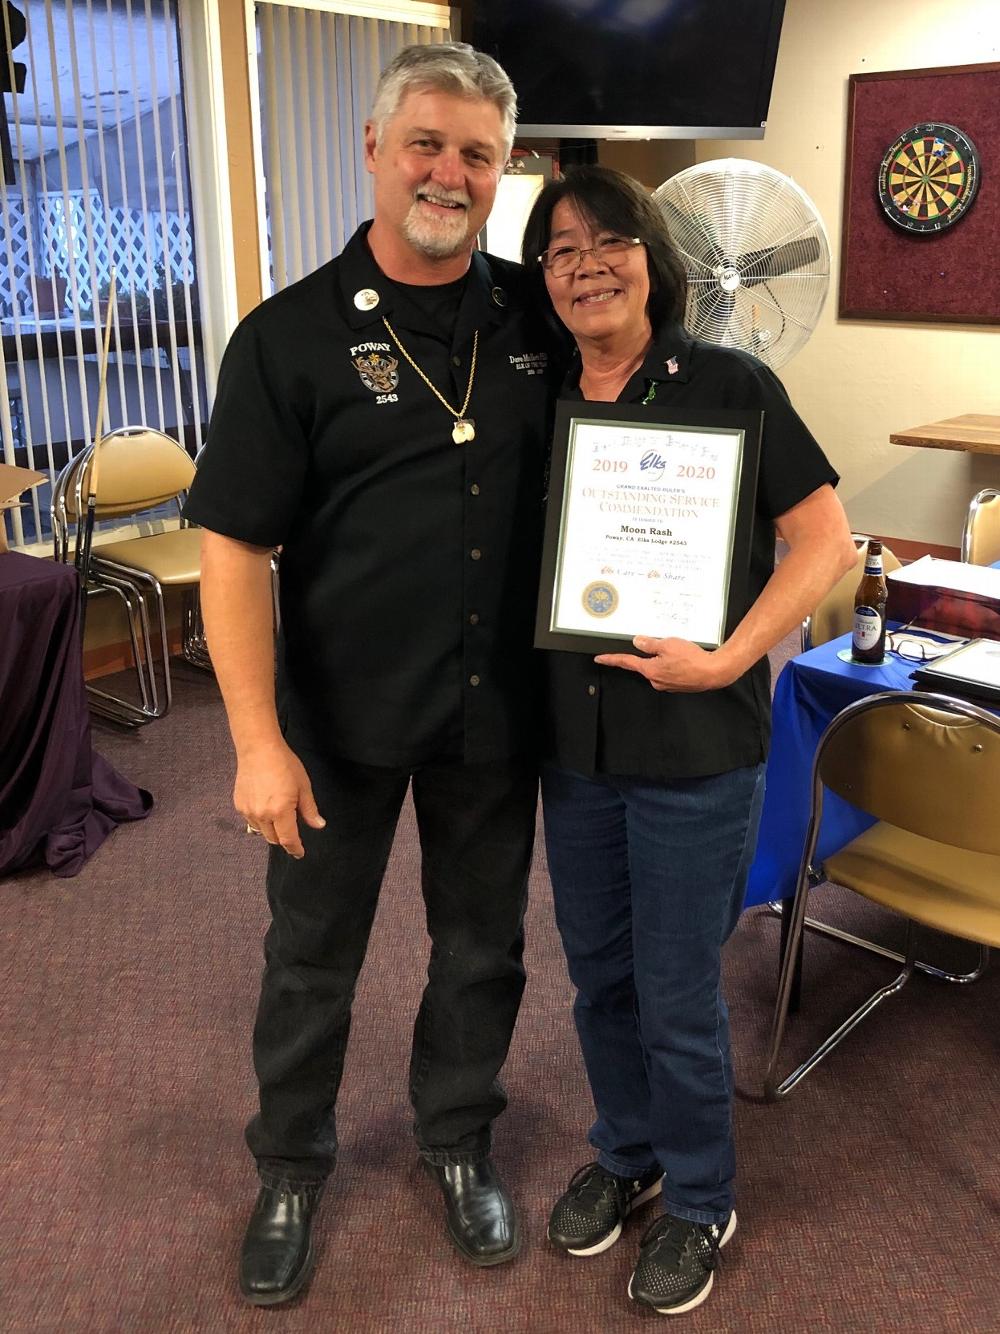 Moon Rash receiving a Grand Lodge Award for her volunteer spirit 3.14.2020 at the ER Awards Dinner from ER Dave Mullett,PER. 
Congratulations!